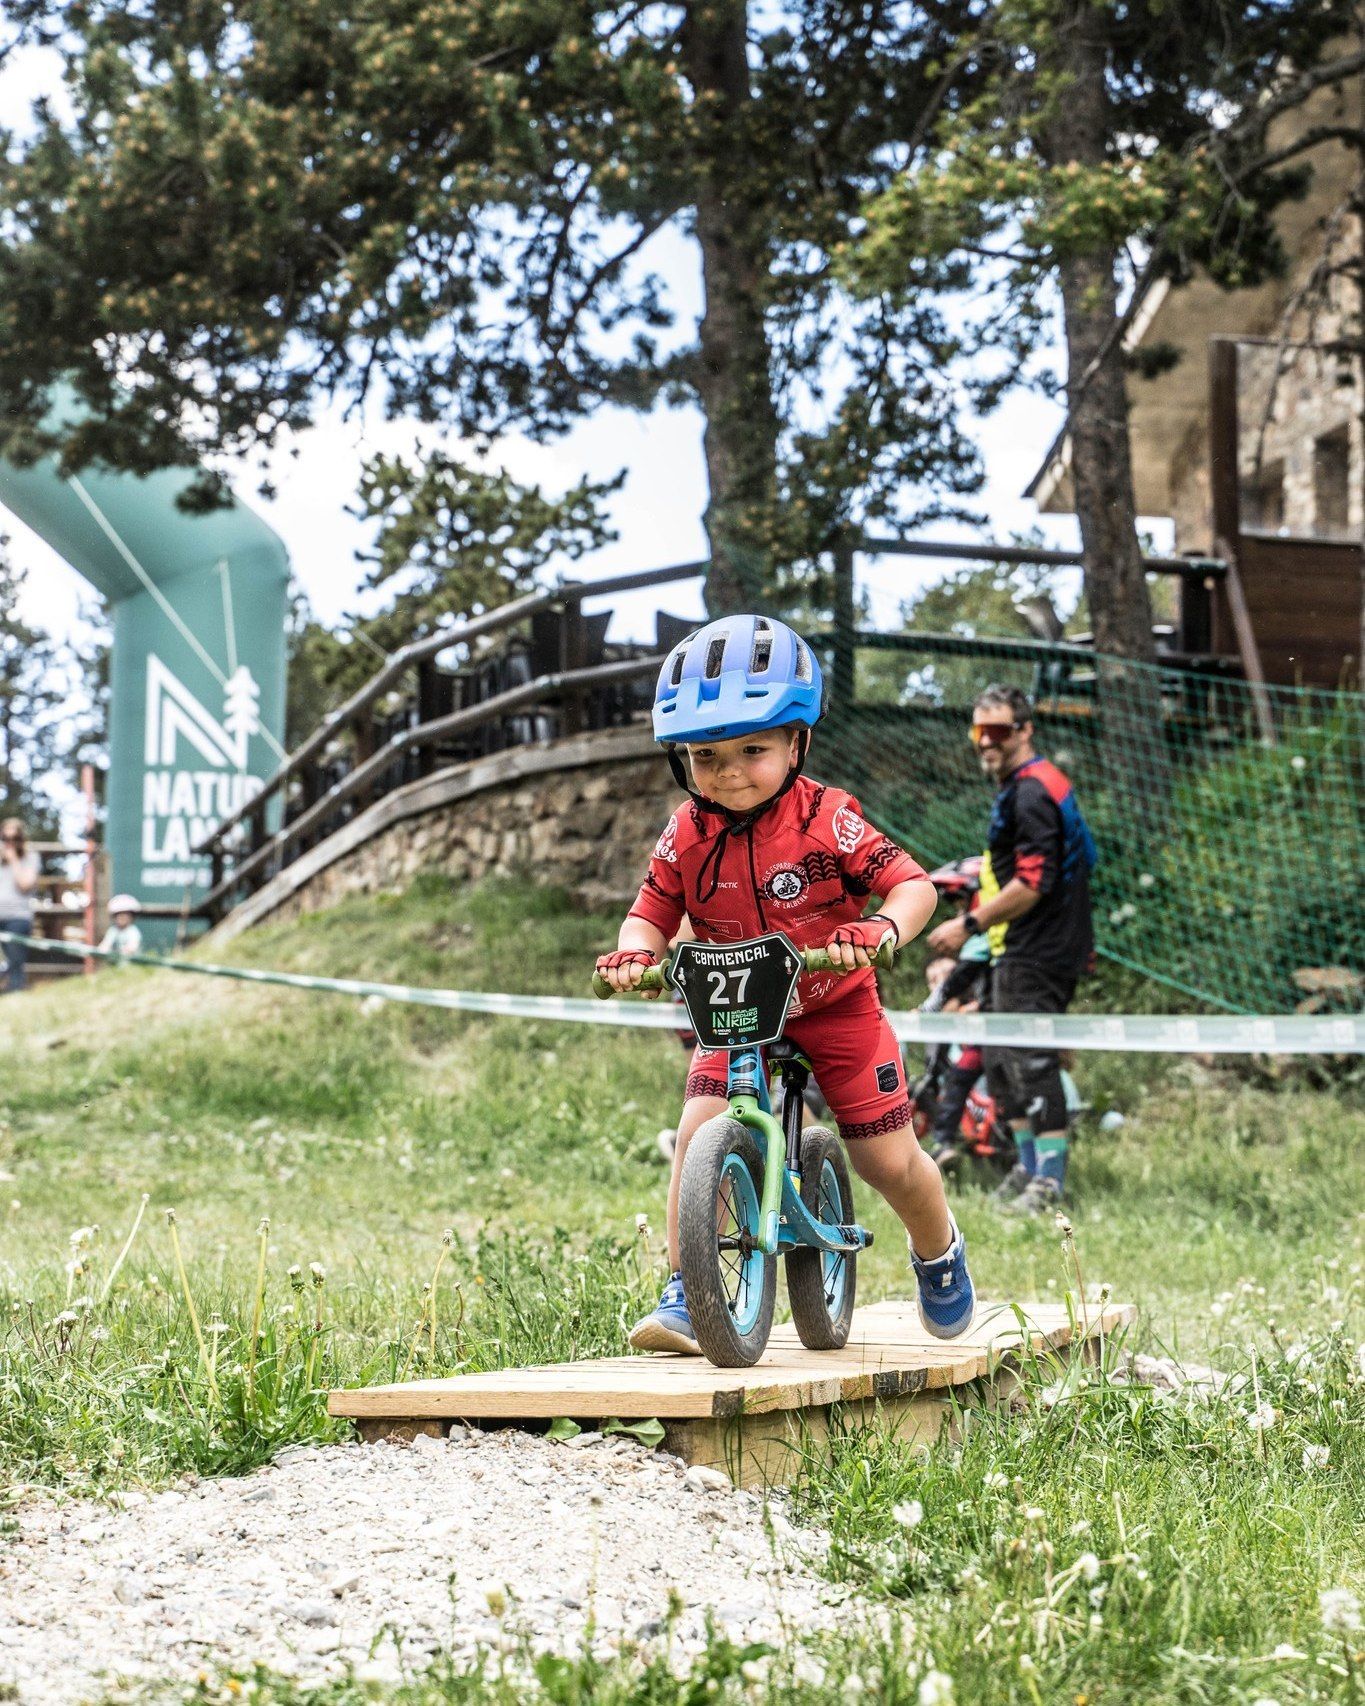 Actividades de bike Park infantil y tobotronc en Naturland